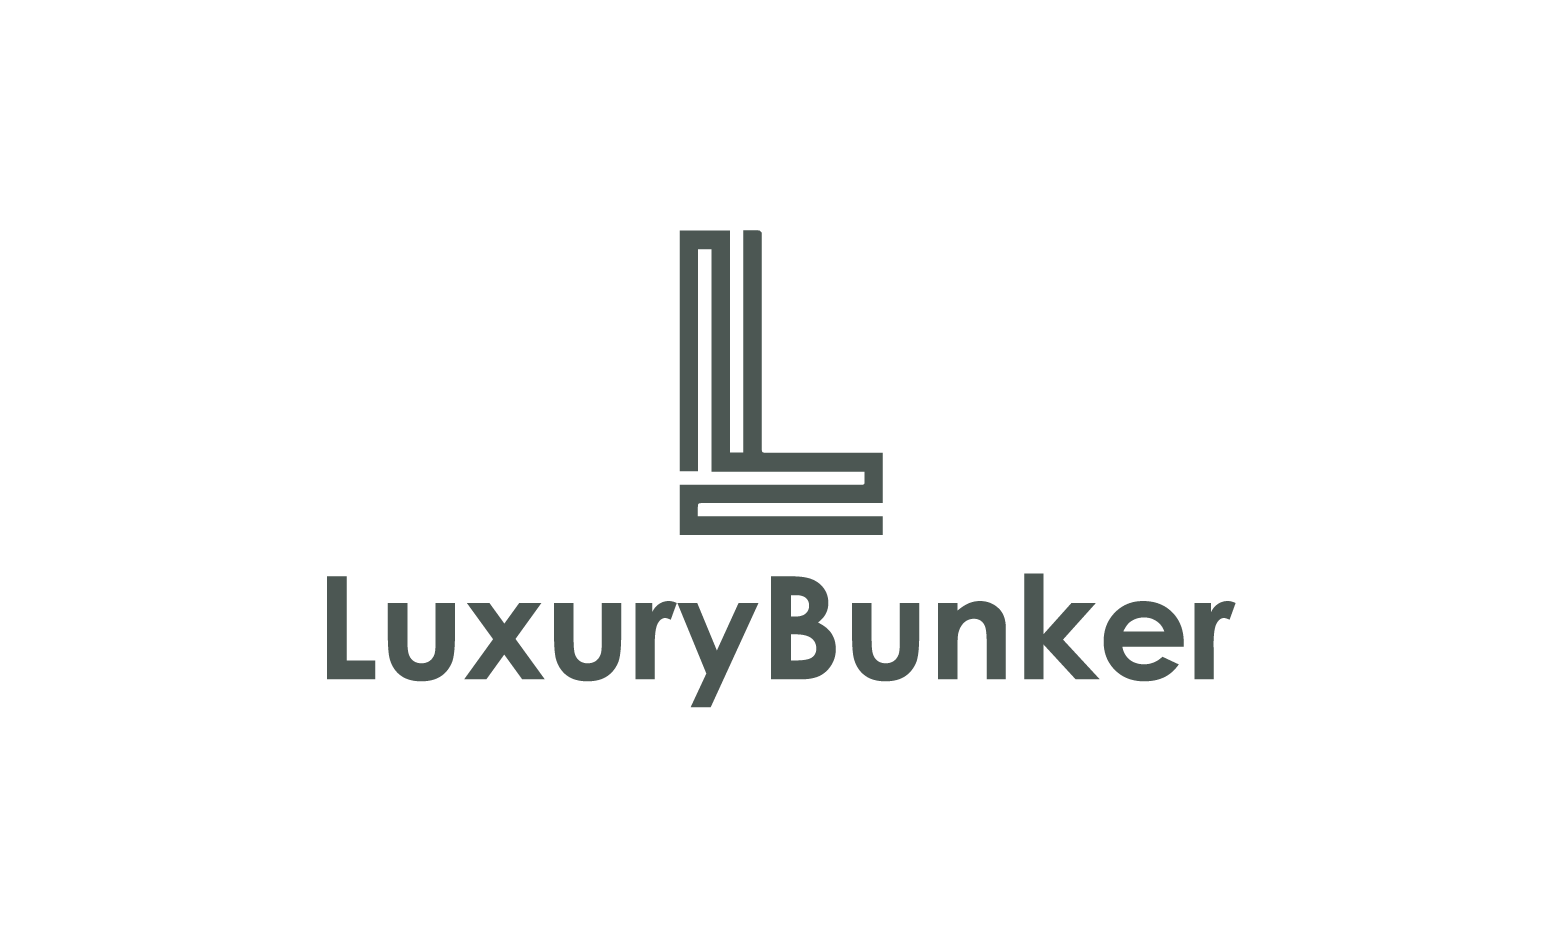 LuxuryBunker.com - Creative brandable domain for sale